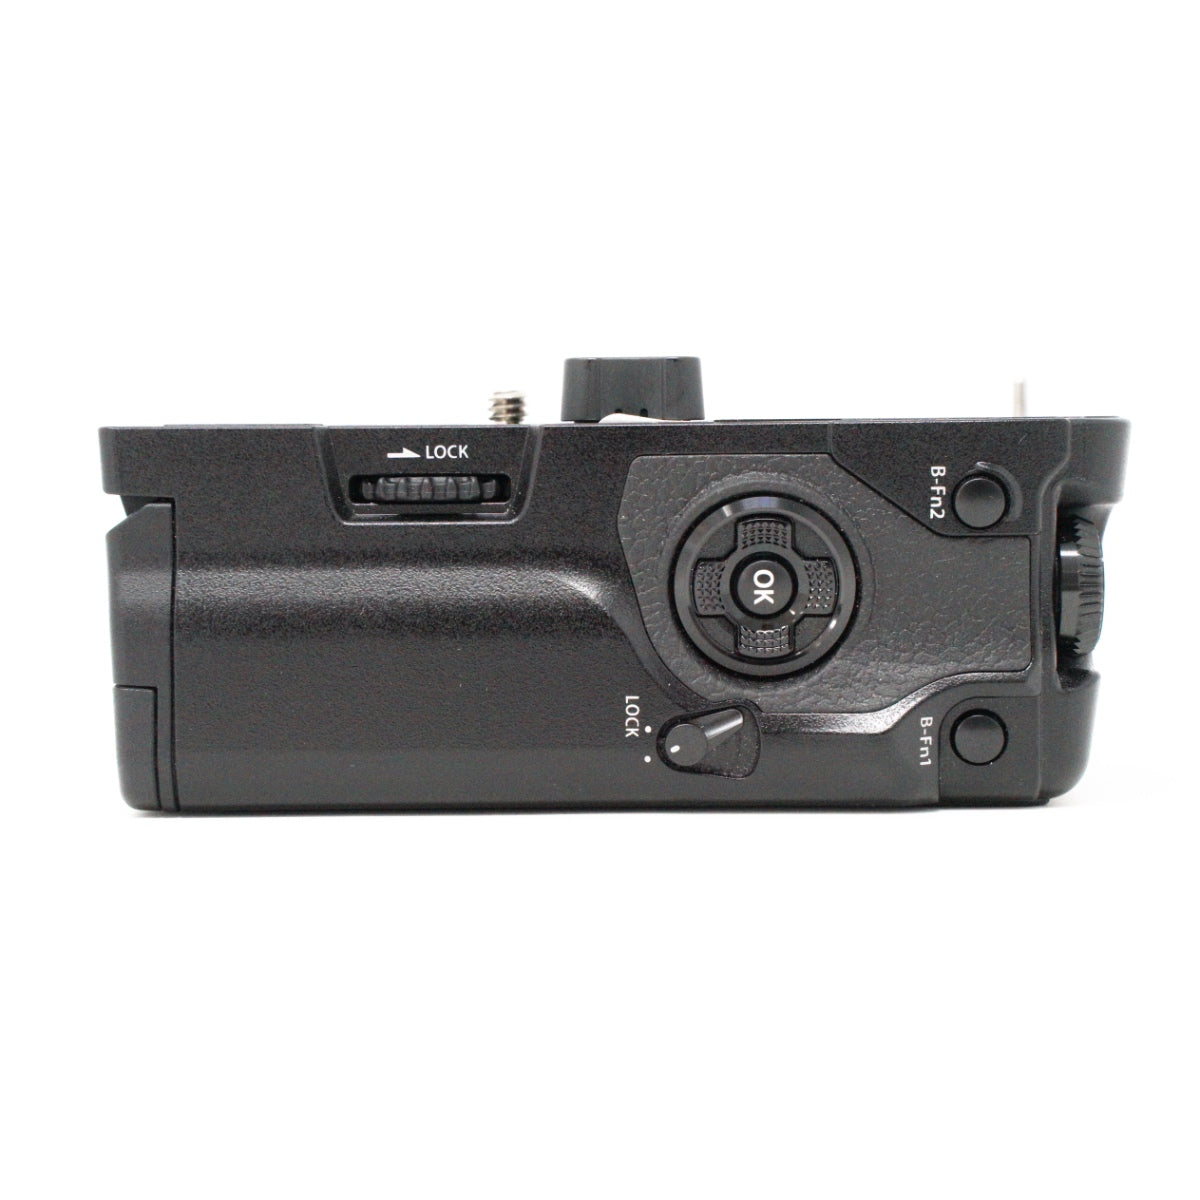 USED Olympus HLD-9 Power Battery Holder for E-M1 Mark II Mark III (Boxed SH40755)